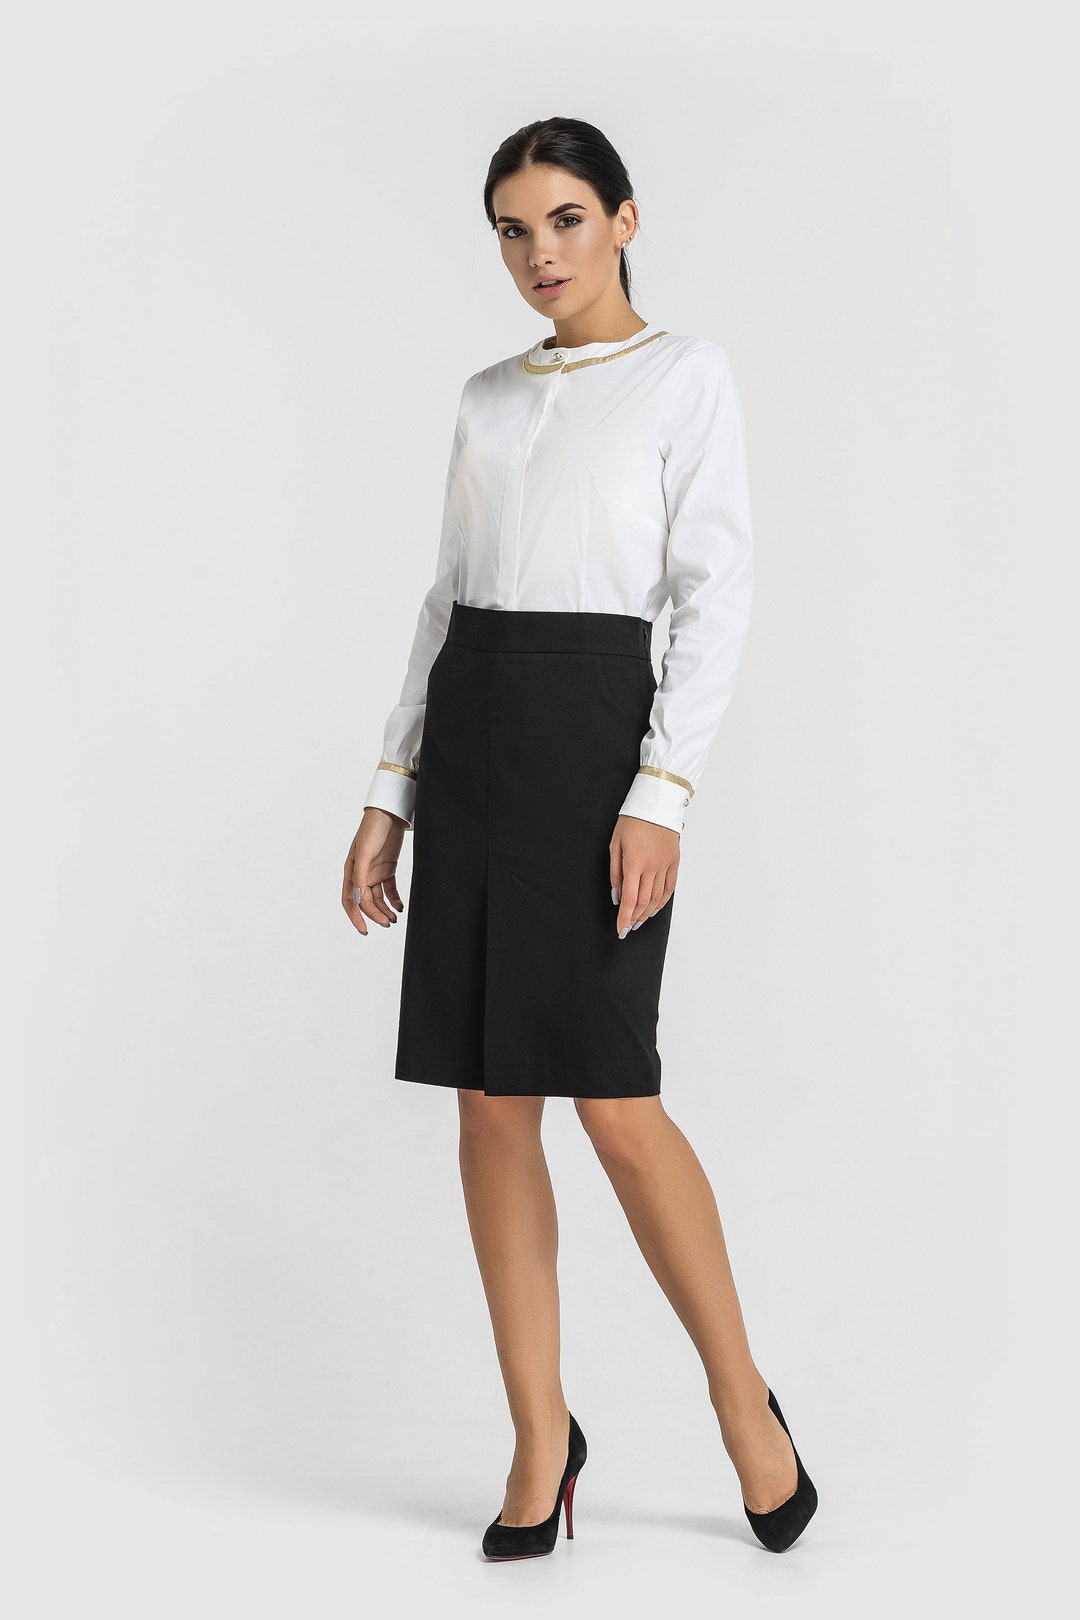 High Waisted Pencil Skirt Midi Black Skirts for Women Plus - Etsy